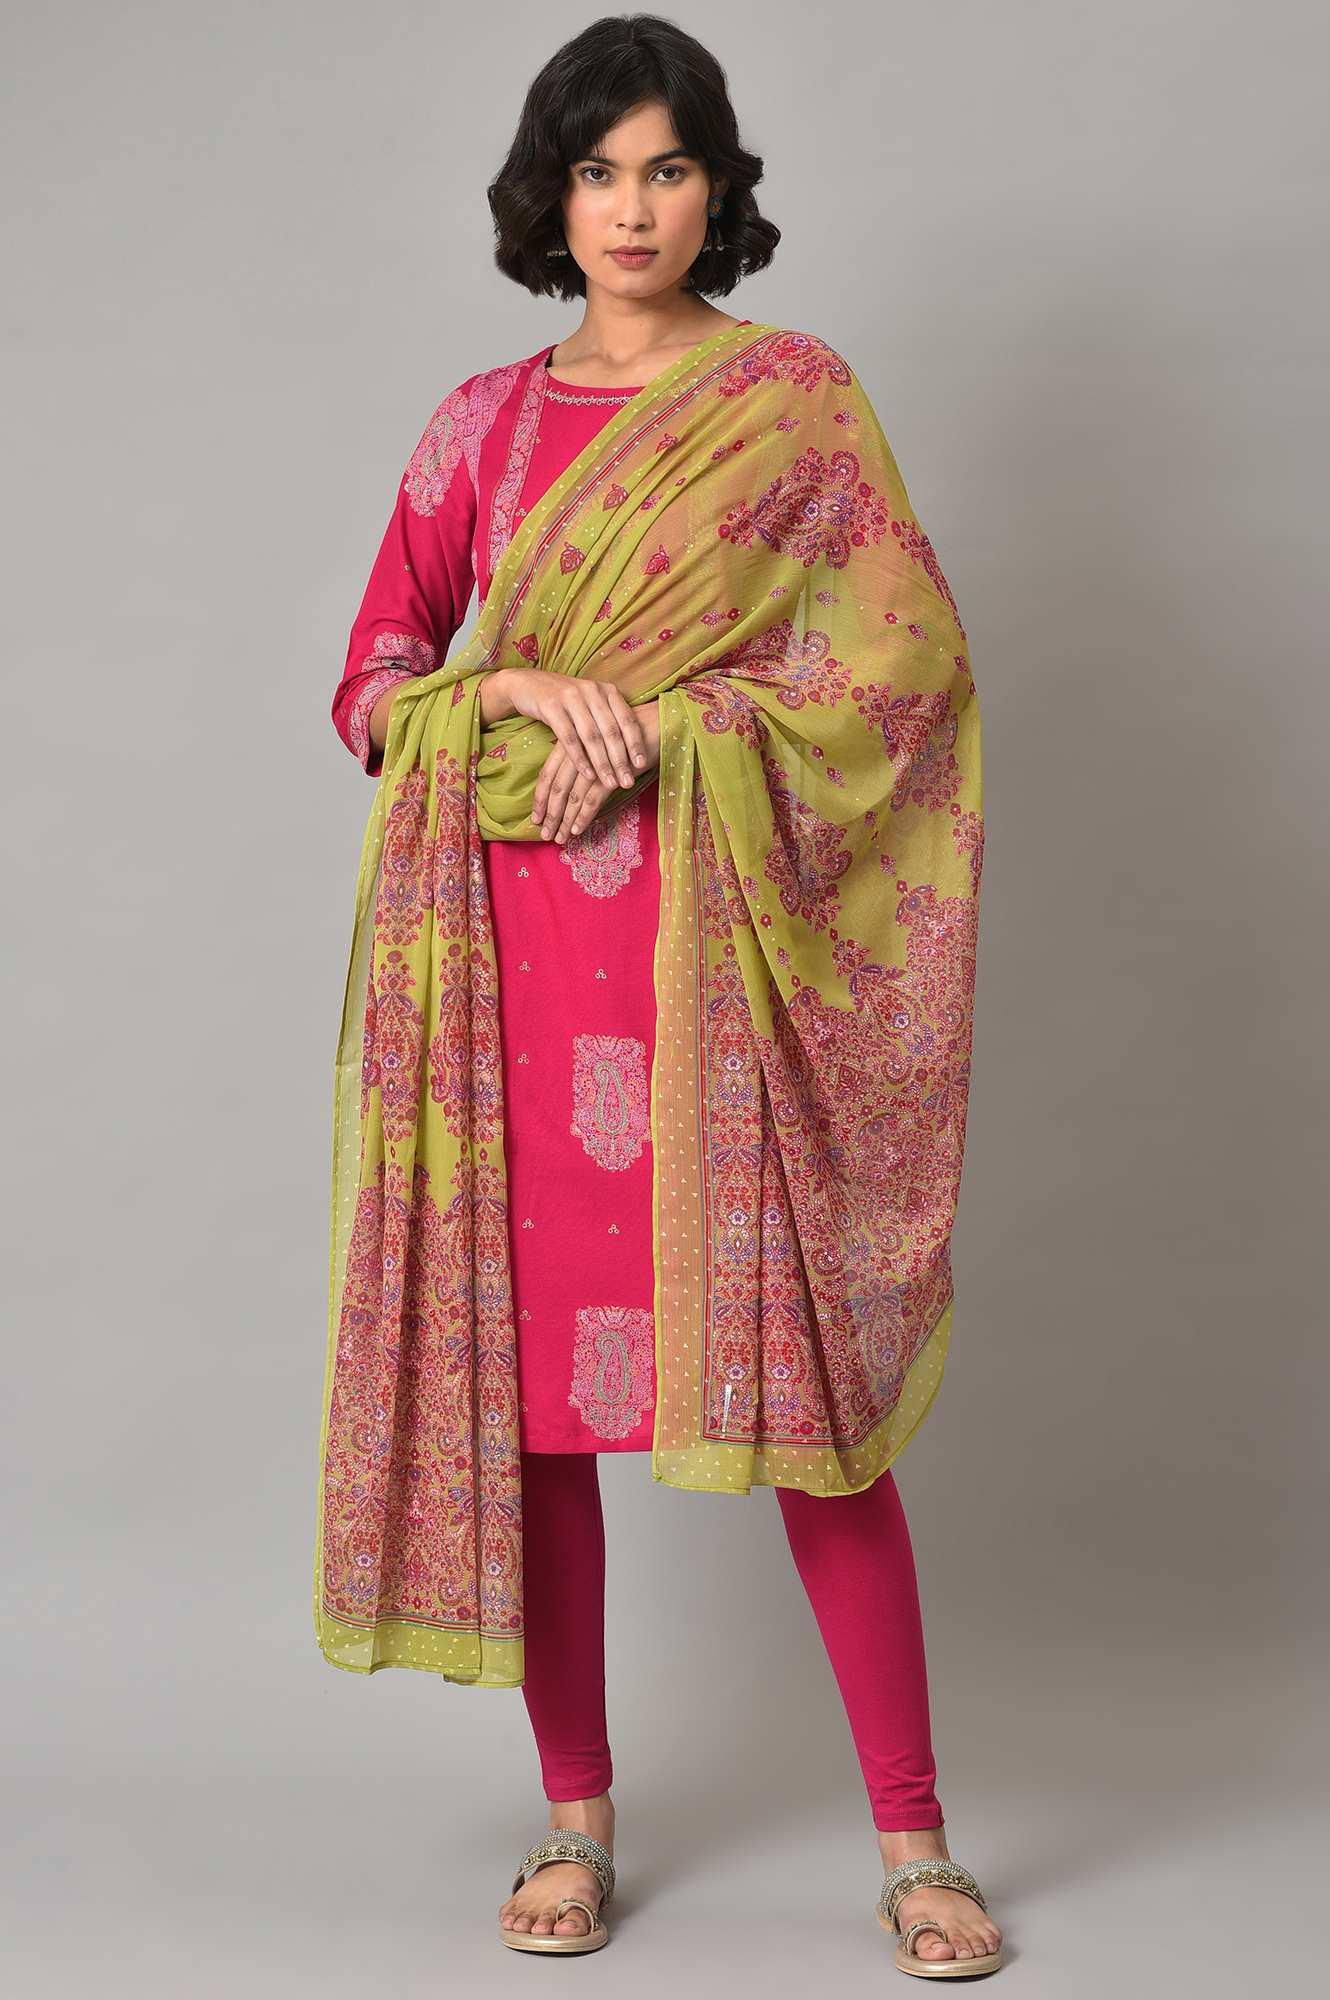 Pink Gold Glitter Printed kurta With Tights And Green Printed Dupatta - wforwoman